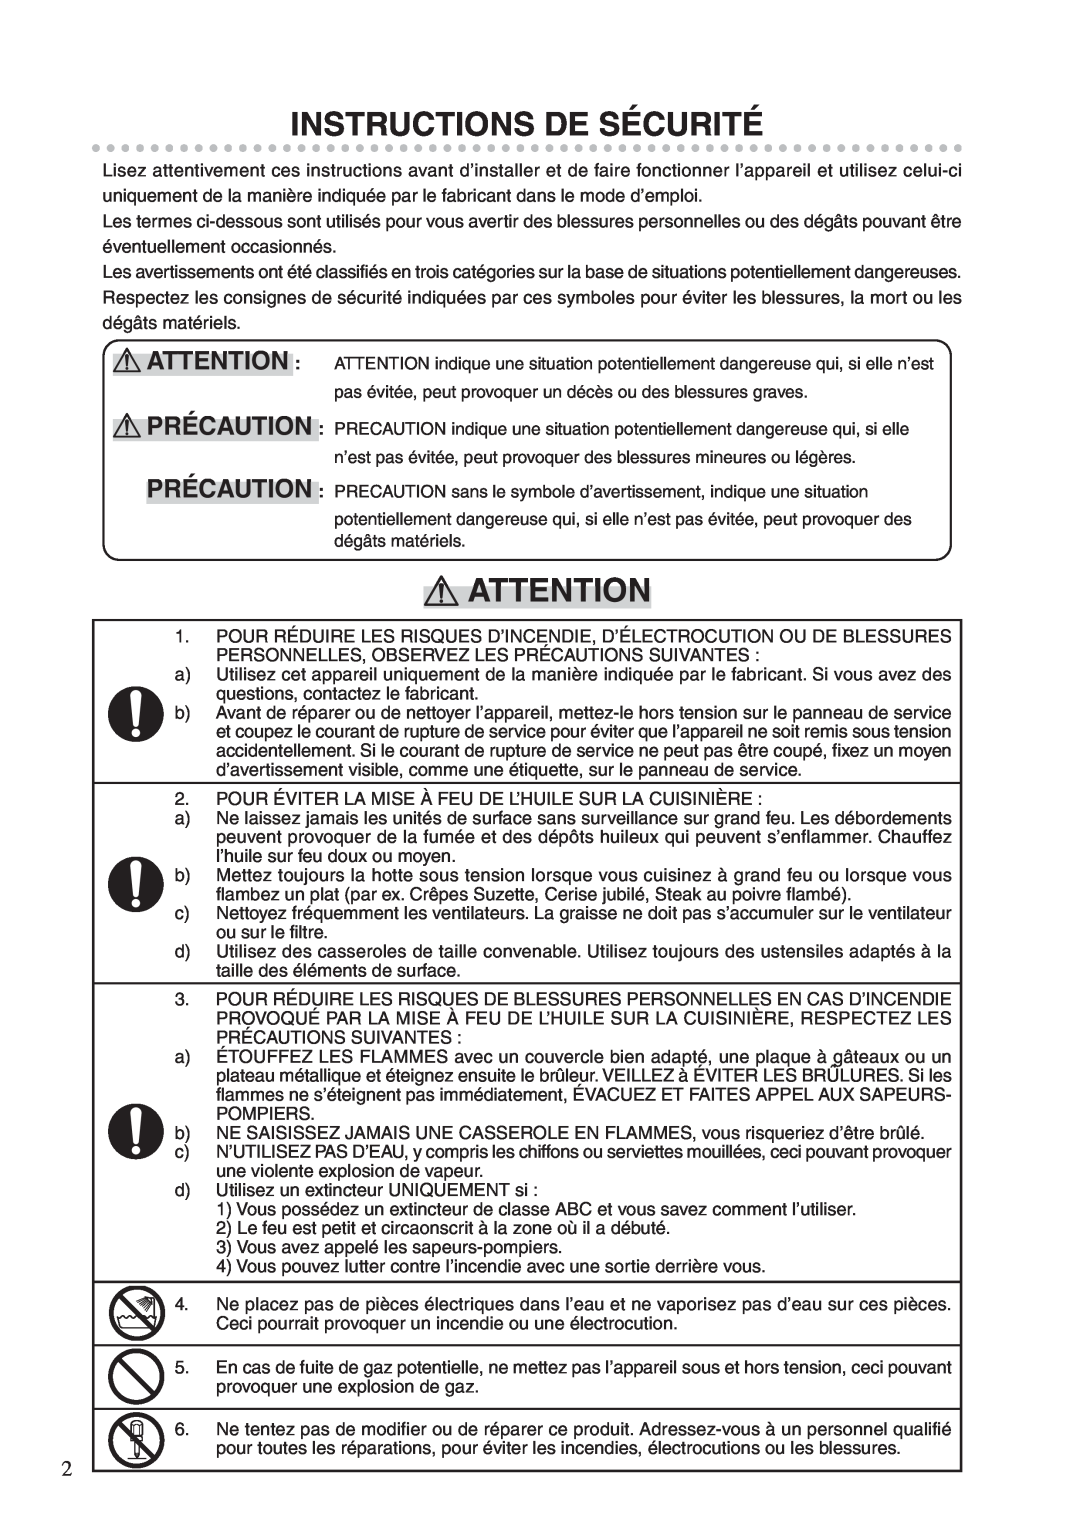 Fujioh BUF-04J operation manual Instructions De Sécurité 